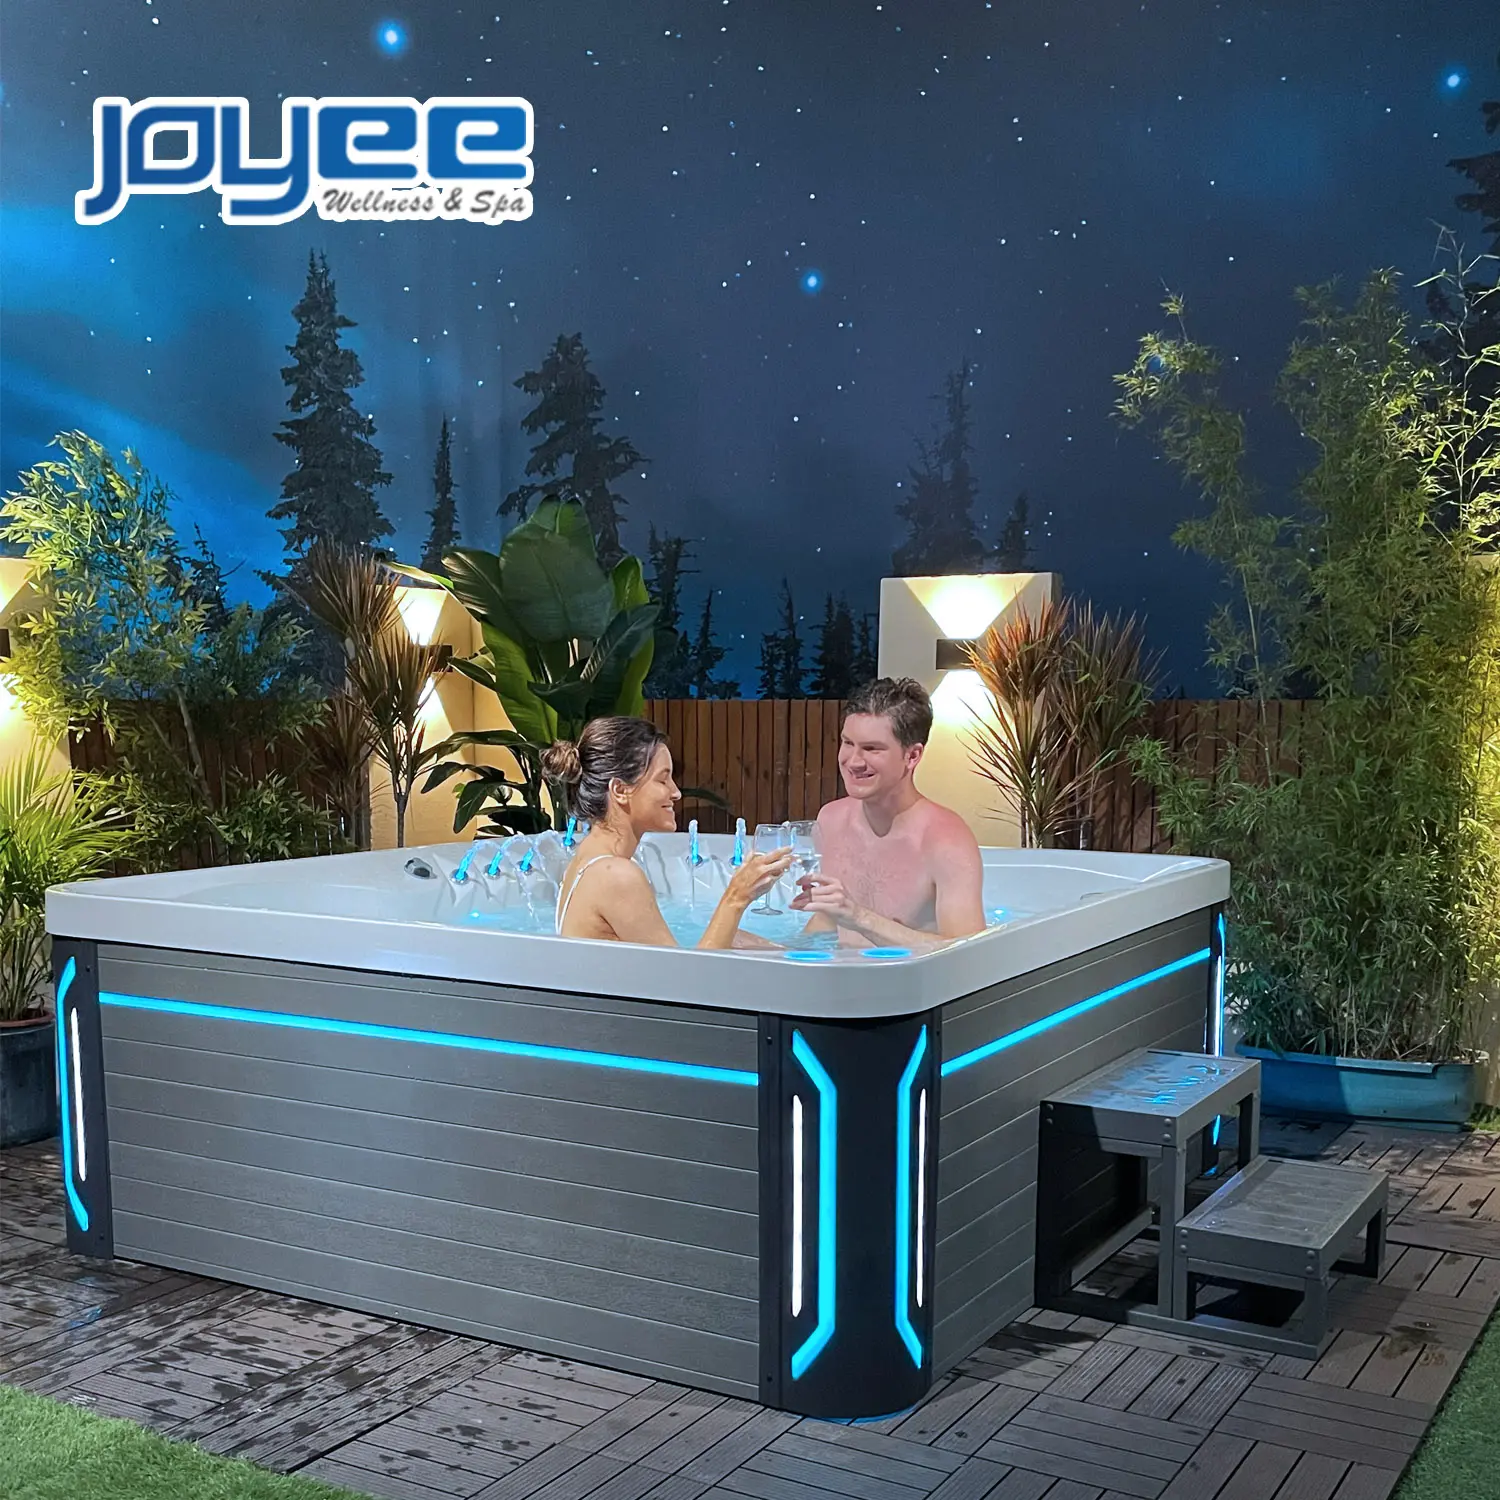 JOYEE Brand New Family Hydro Bath Whirlpools Acrylic Balboa Spa Pool 5 Adults Hot Tub with LED Corner Strip Light